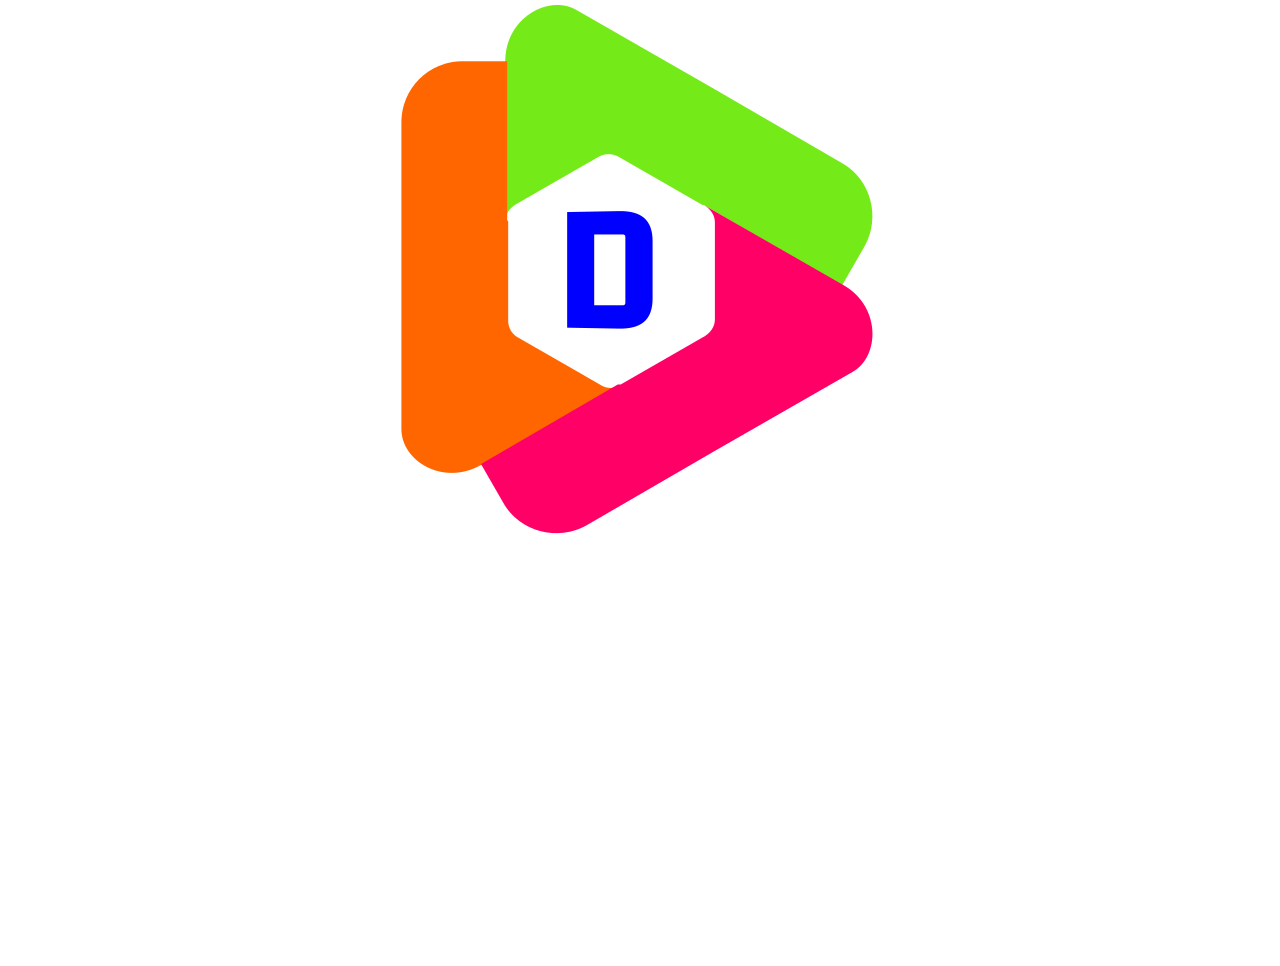 Digi Receipts's logo